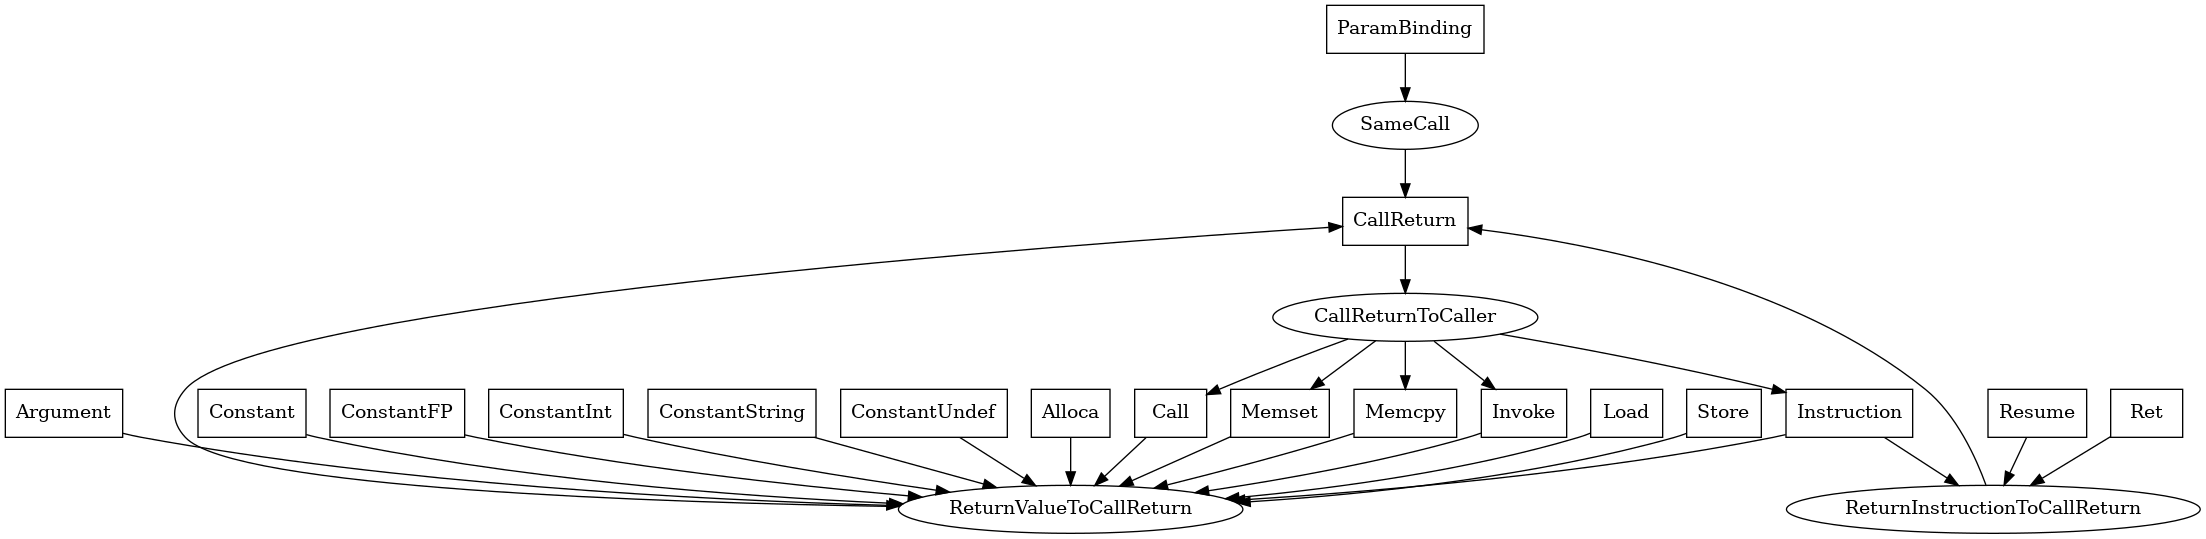 Entity-relationship diagram for CallReturn nodes